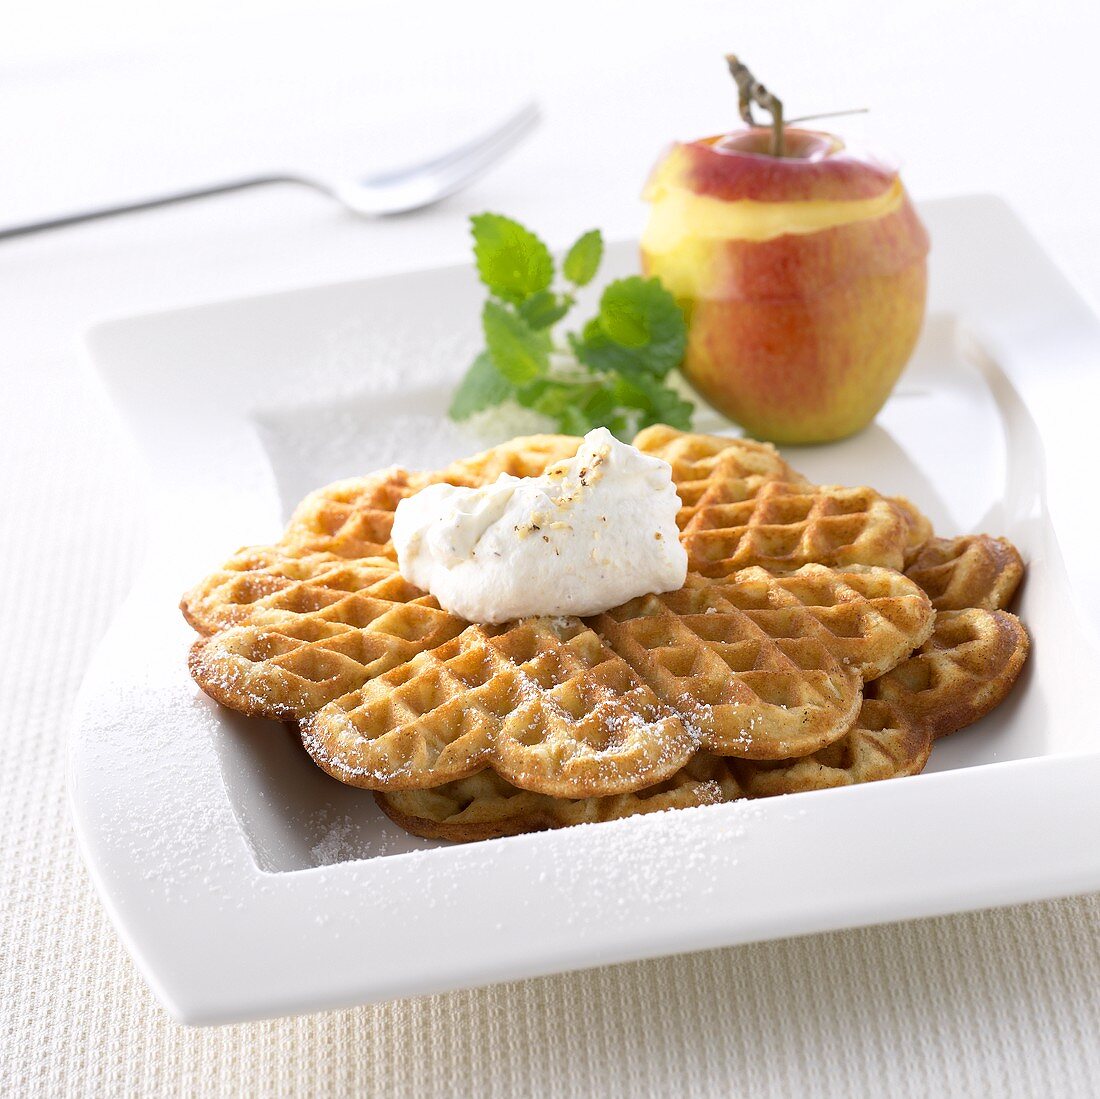 Apple waffles with nut cream